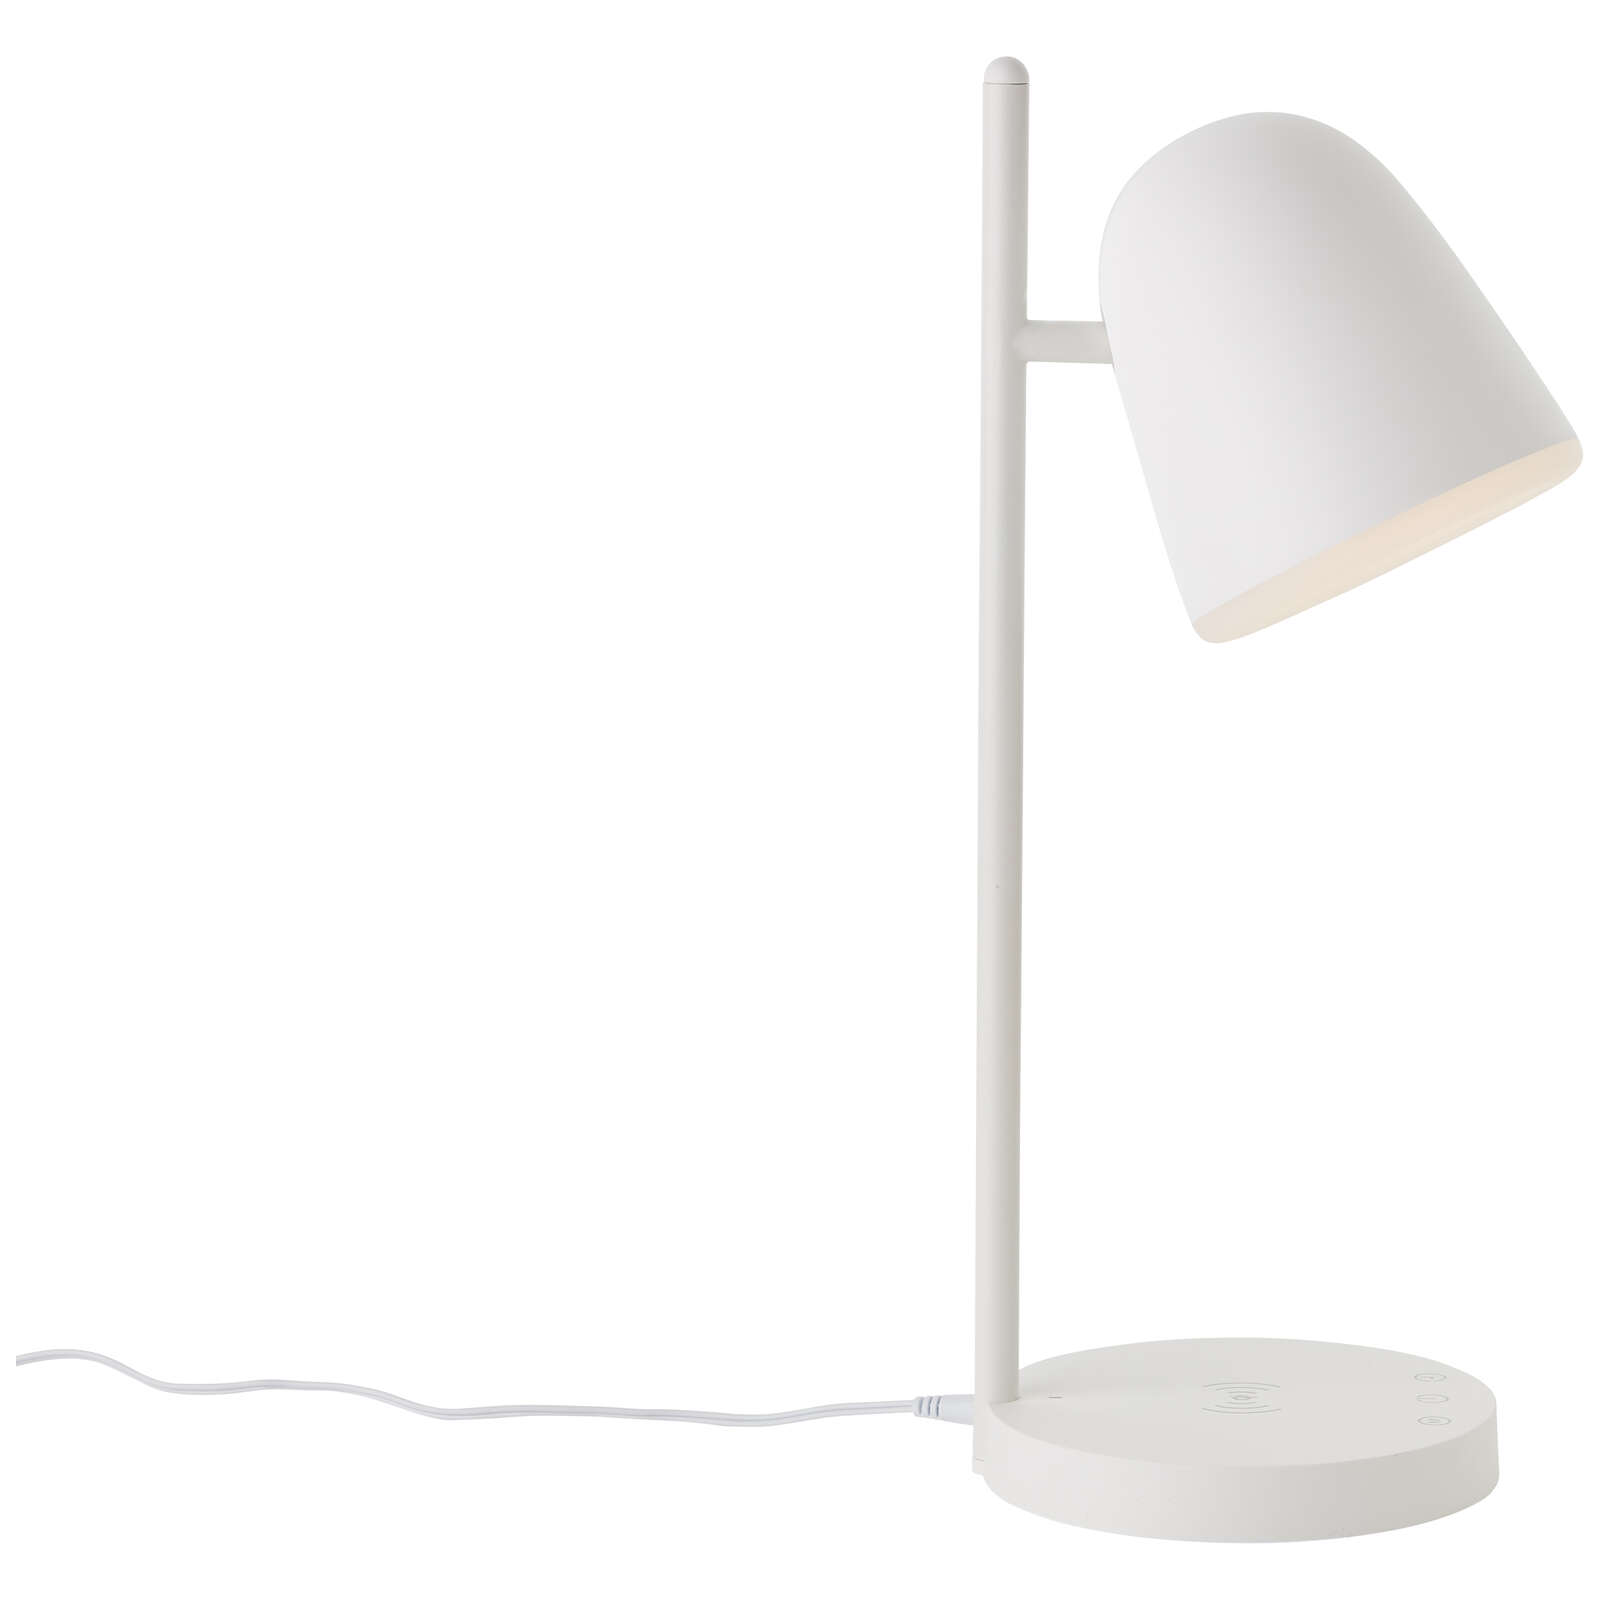             Plastic table lamp - Lotta - White
        